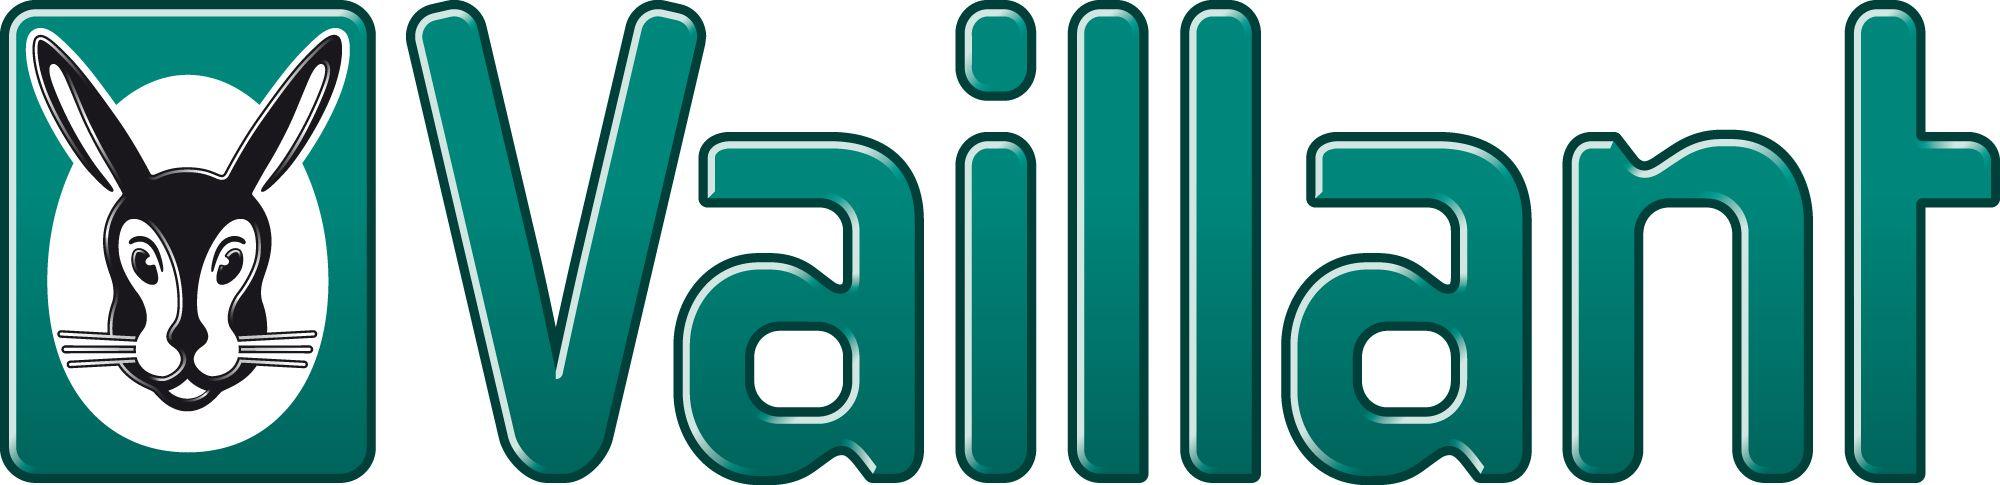 Vaillant Logo - Vaillant Group